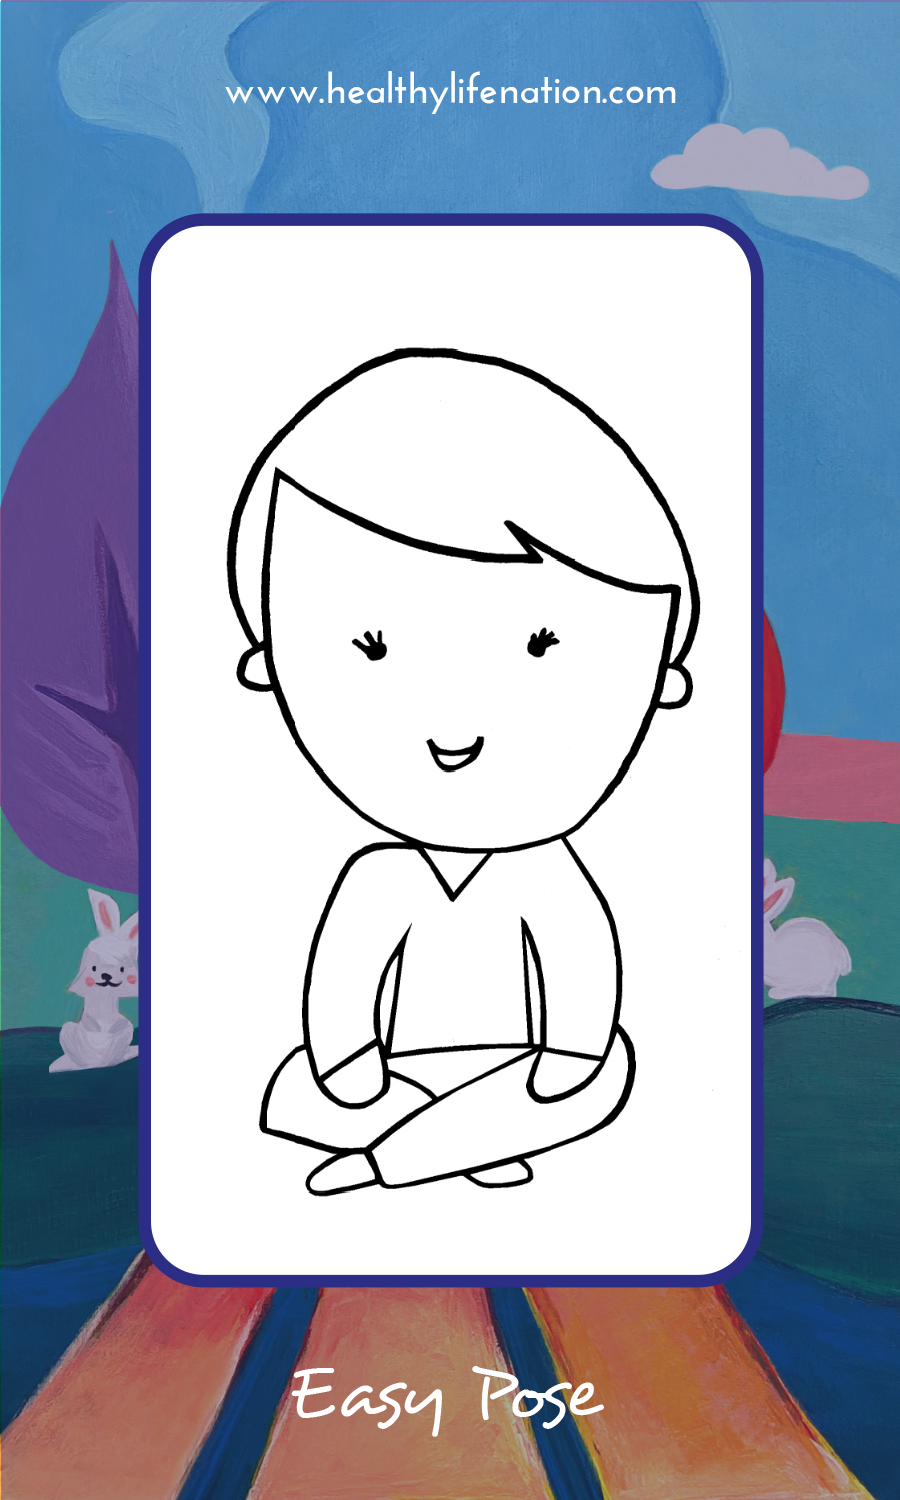 YOGI FUN Kids Yoga Cards Kit with Illustrations, Rhyming Poems, Birthday  Activit | eBay